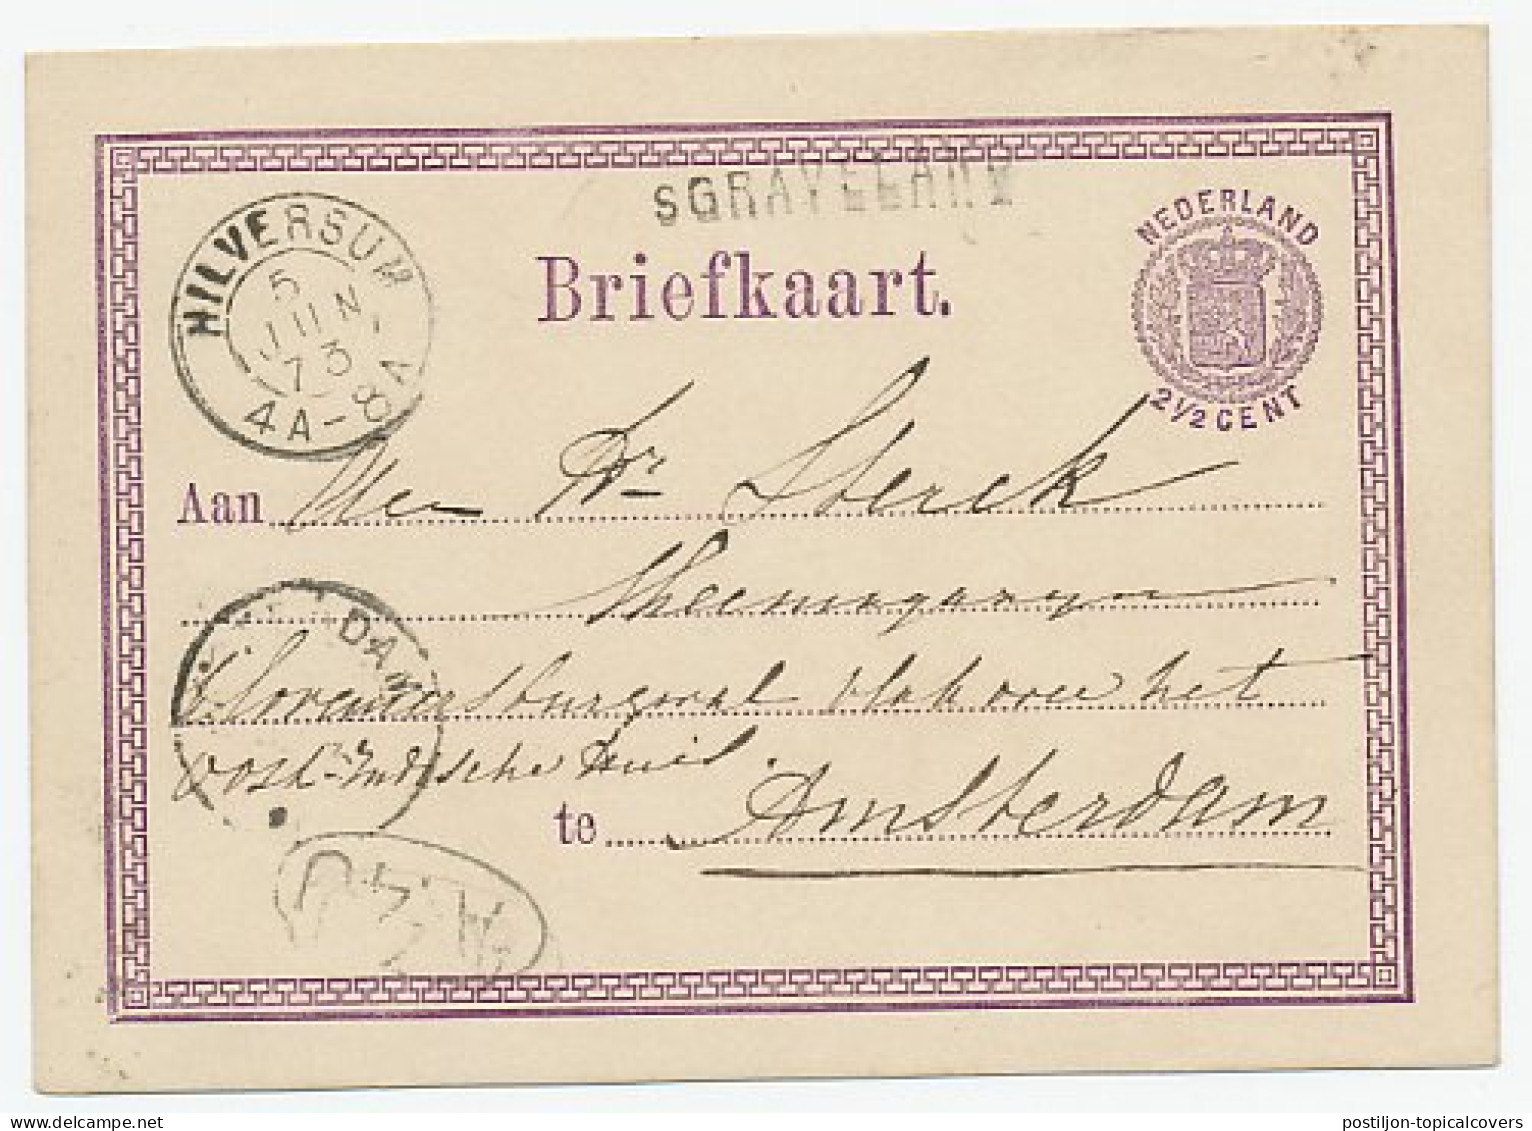 Naamstempel S Graveland 1873 - Cartas & Documentos